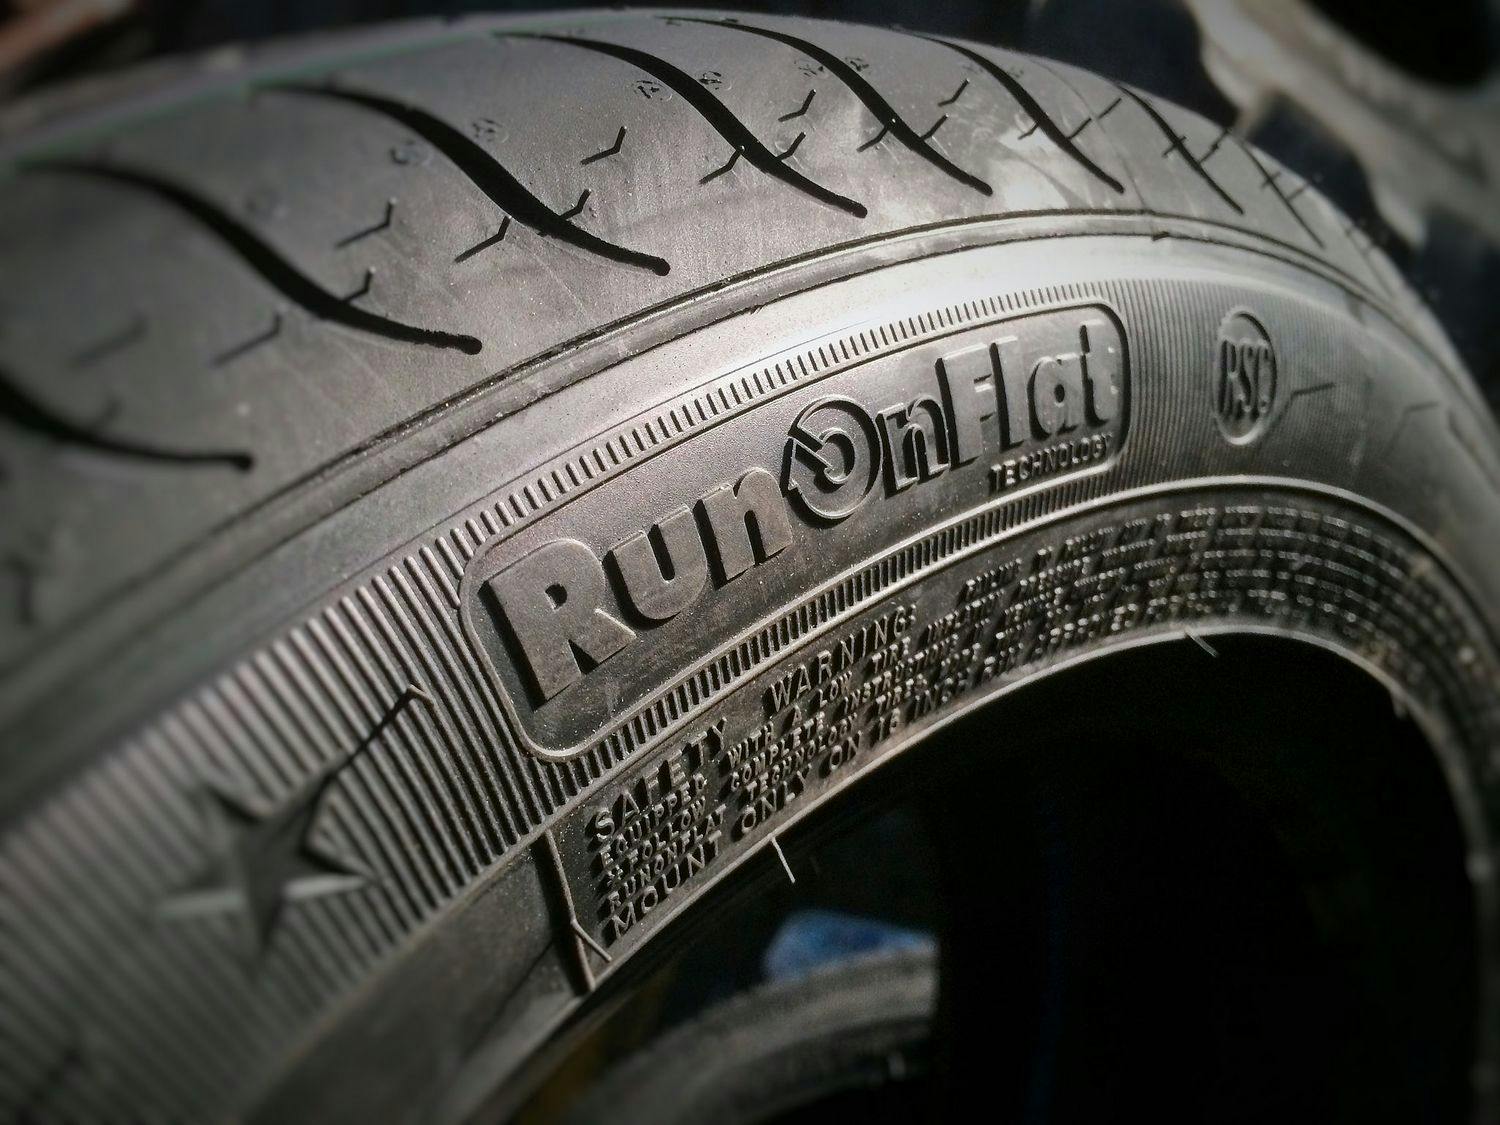 Run-flat tire